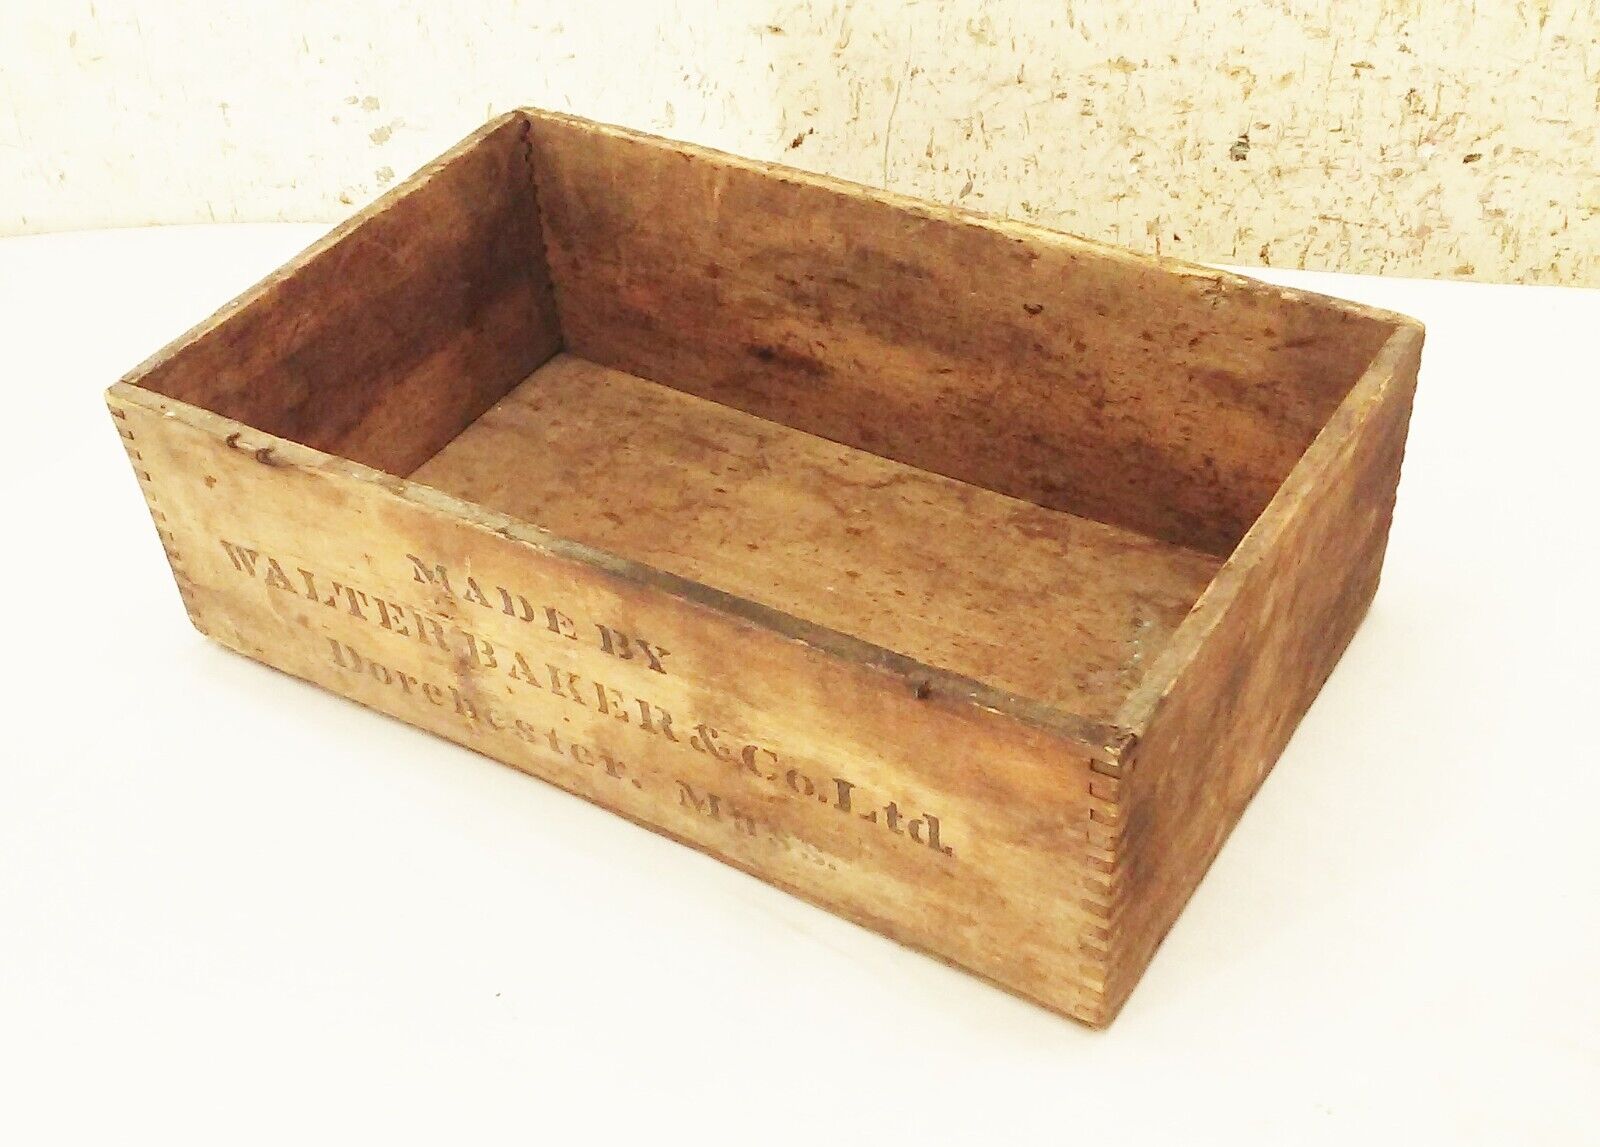 Vtg antique Walter Baker Gold medal wood dovetailed wooden box crate decor